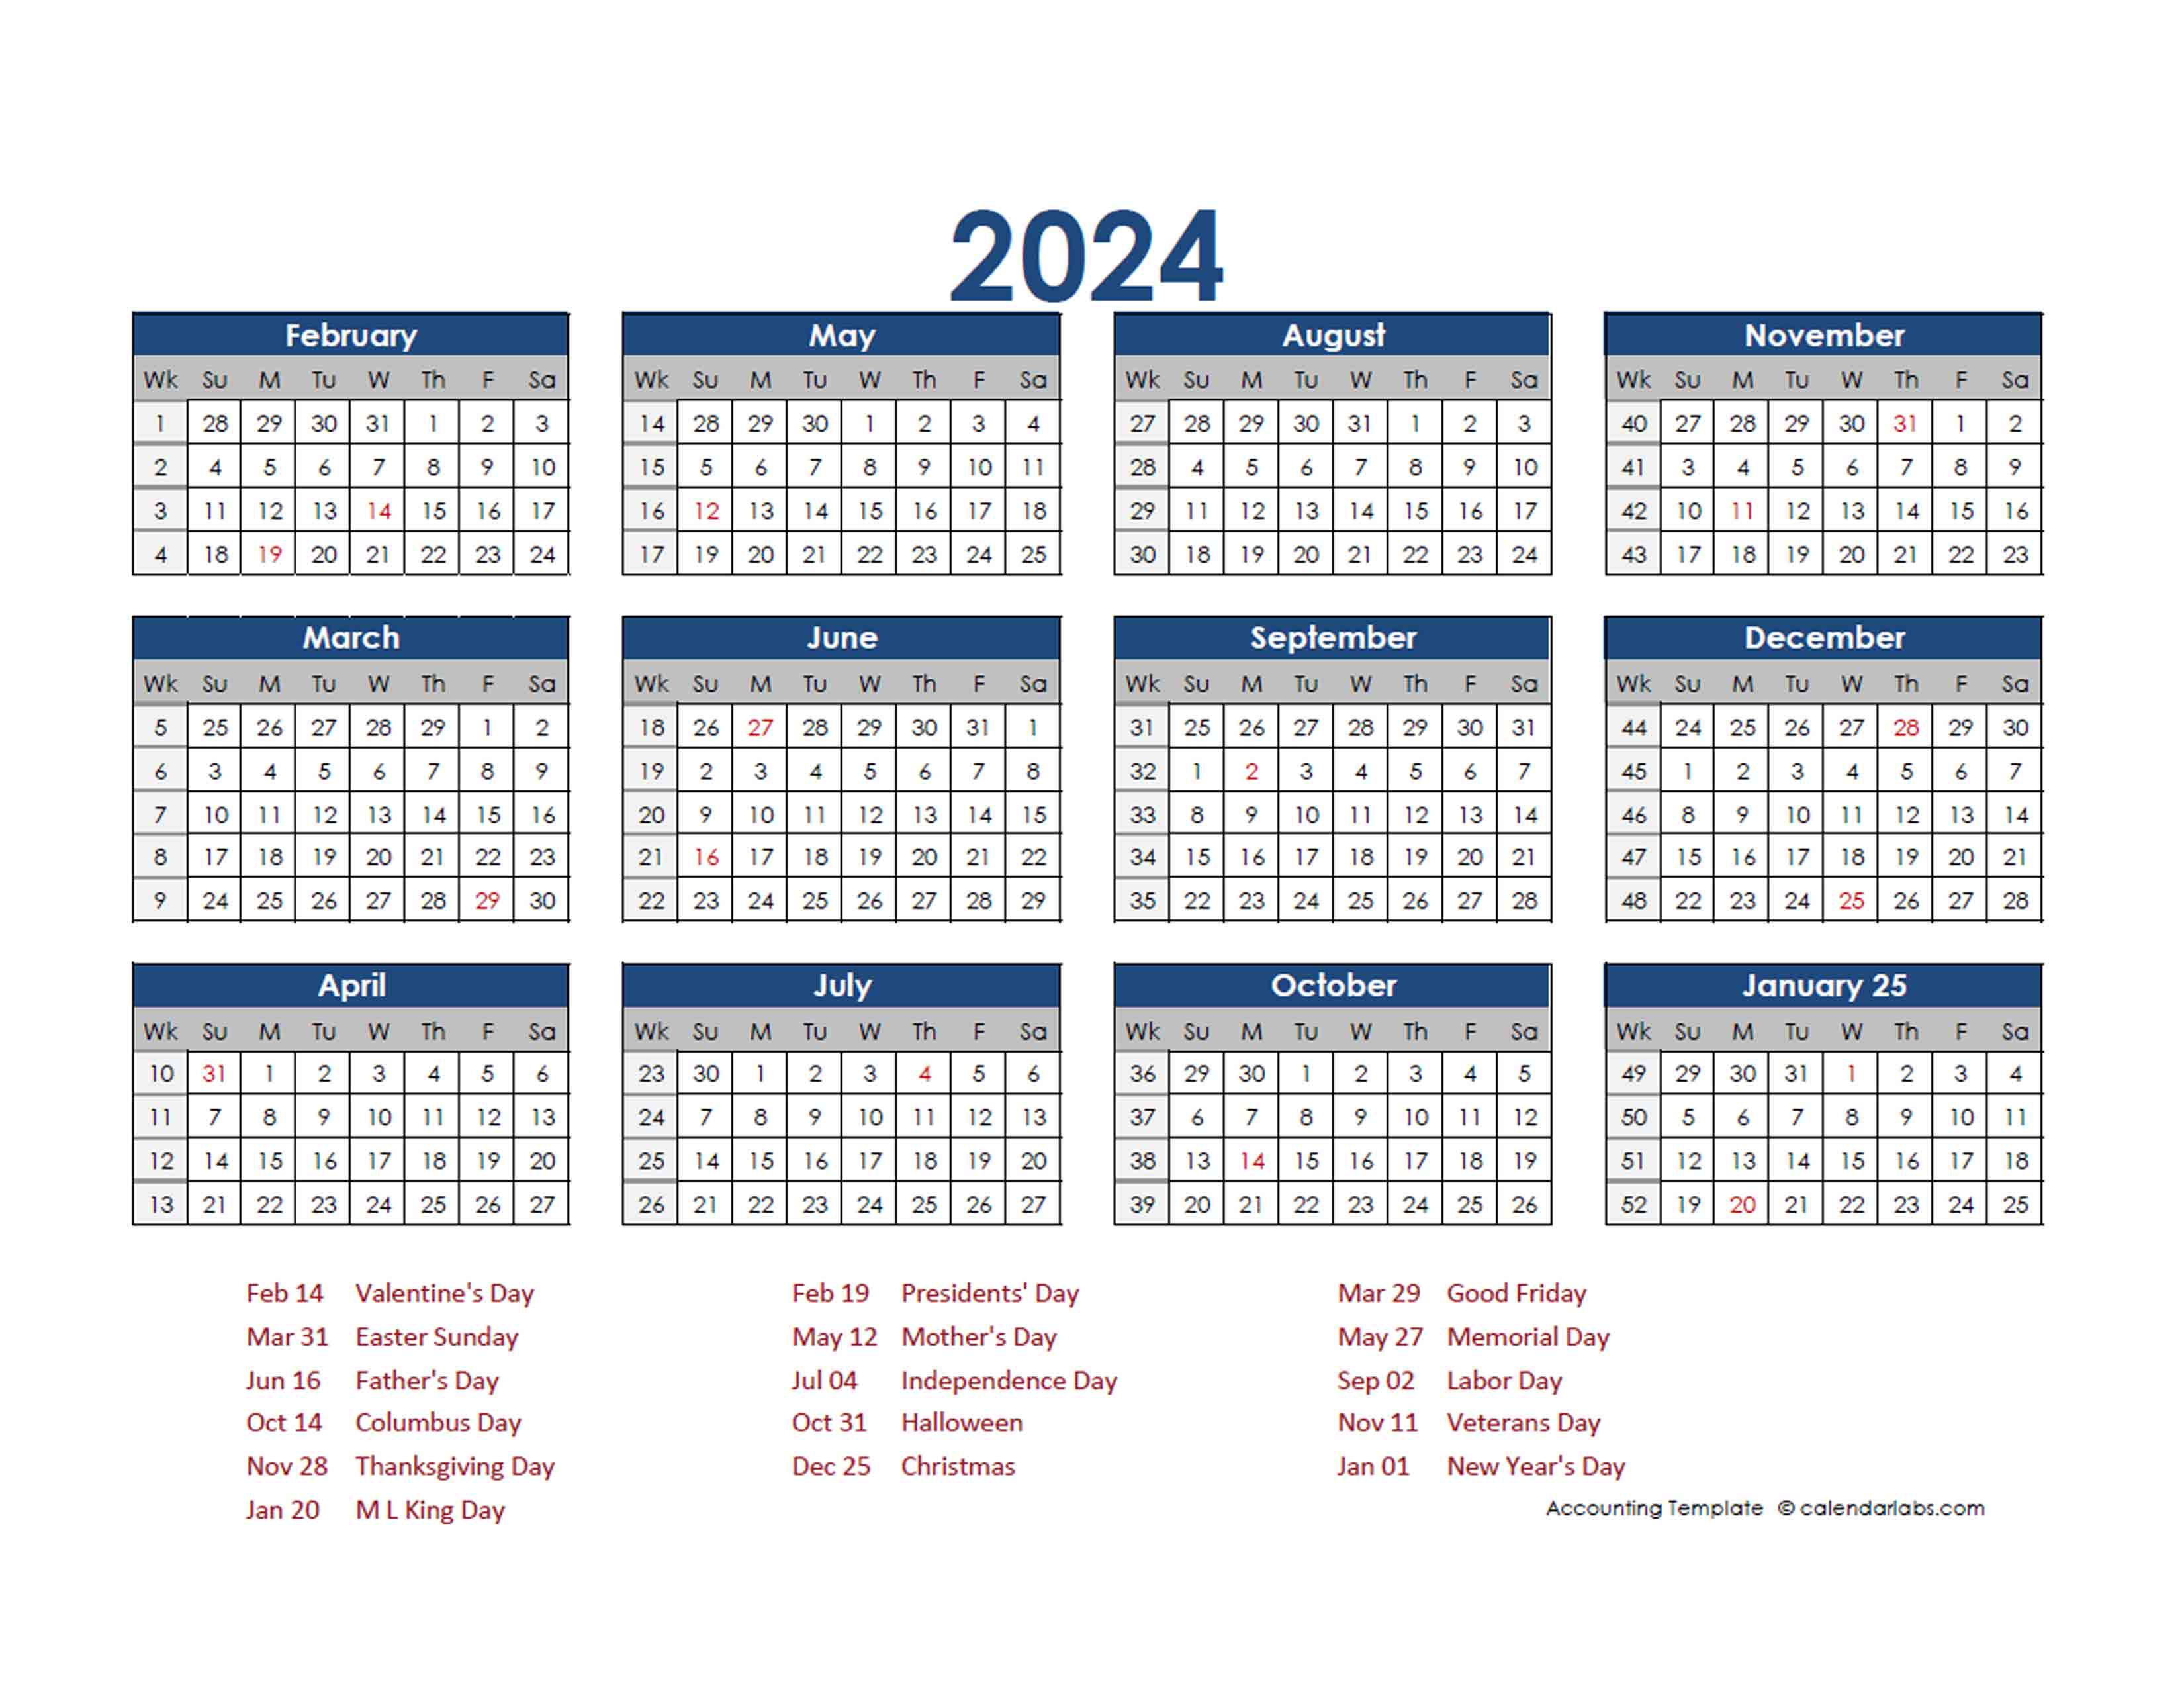 2024 Accounting Calendar 454 Free Printable Templates